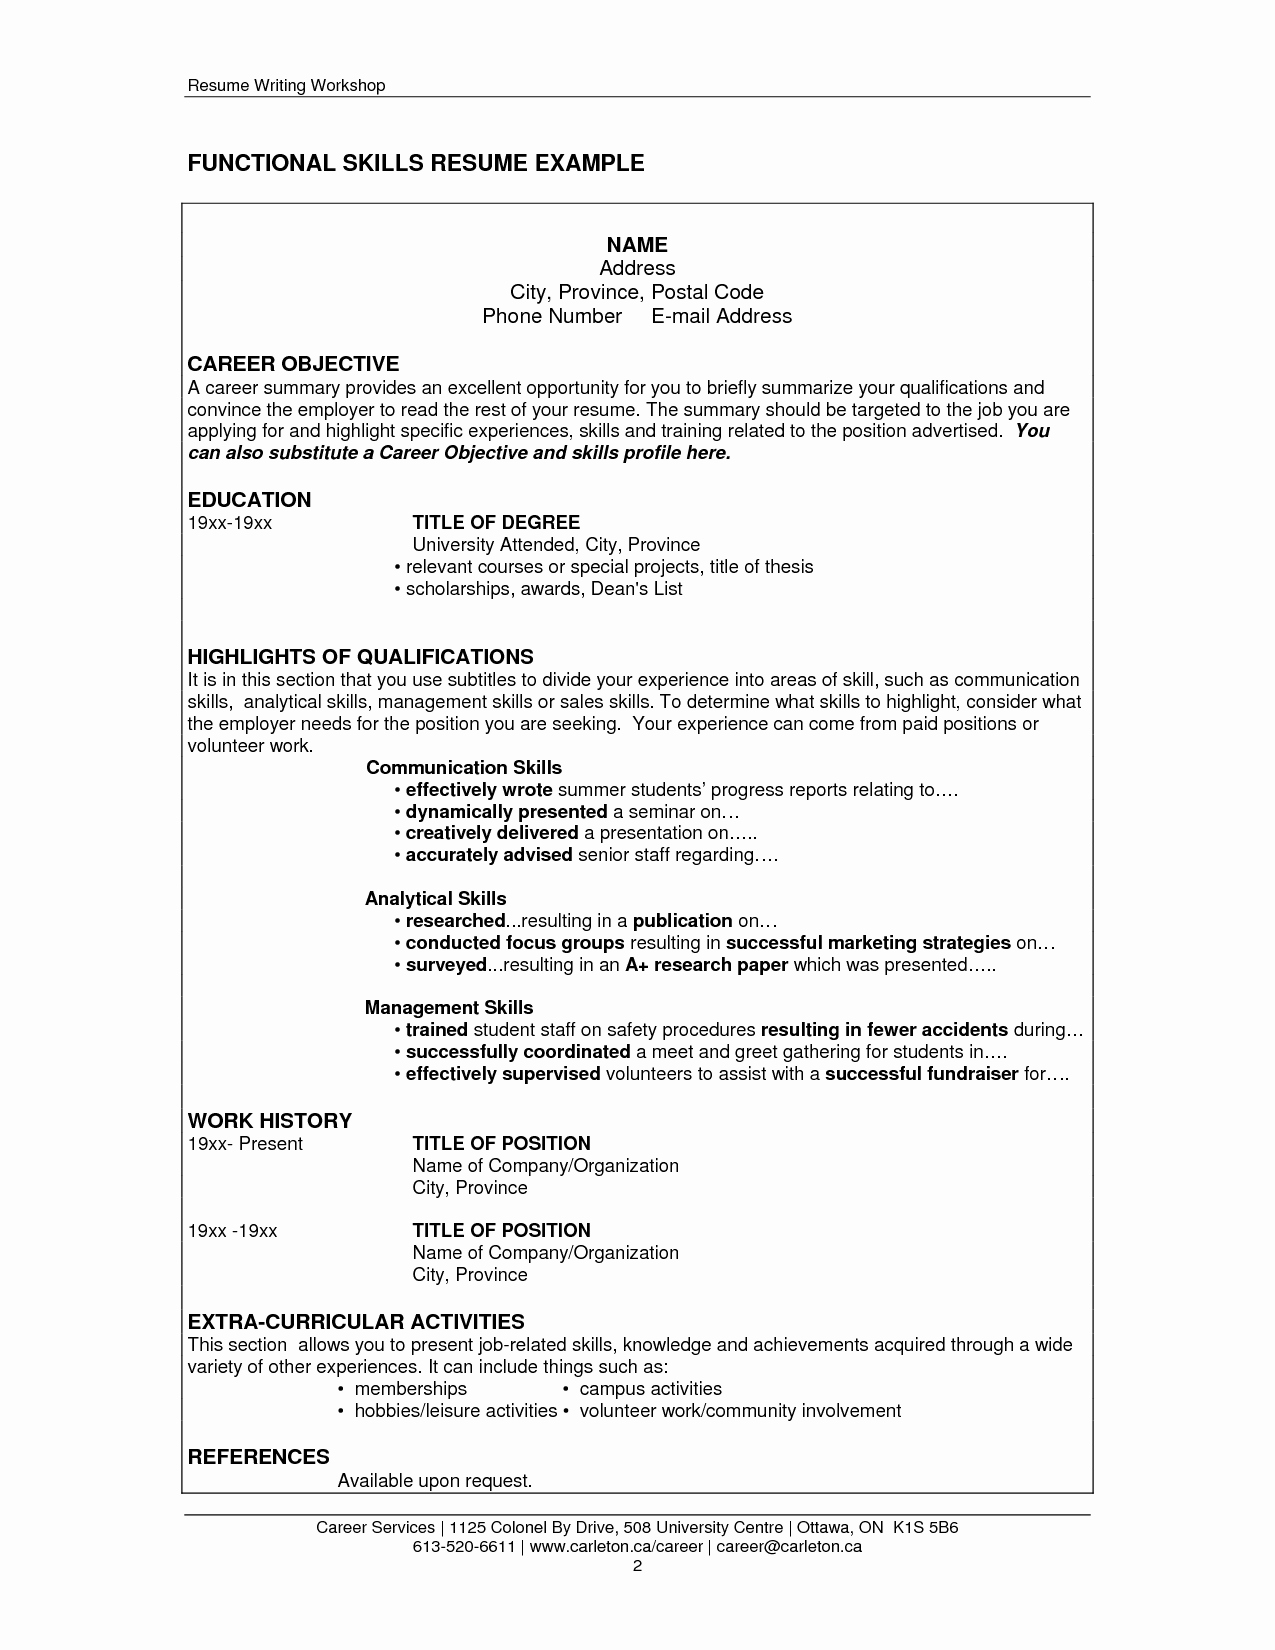 Resume Qualifications Summary Customer Service